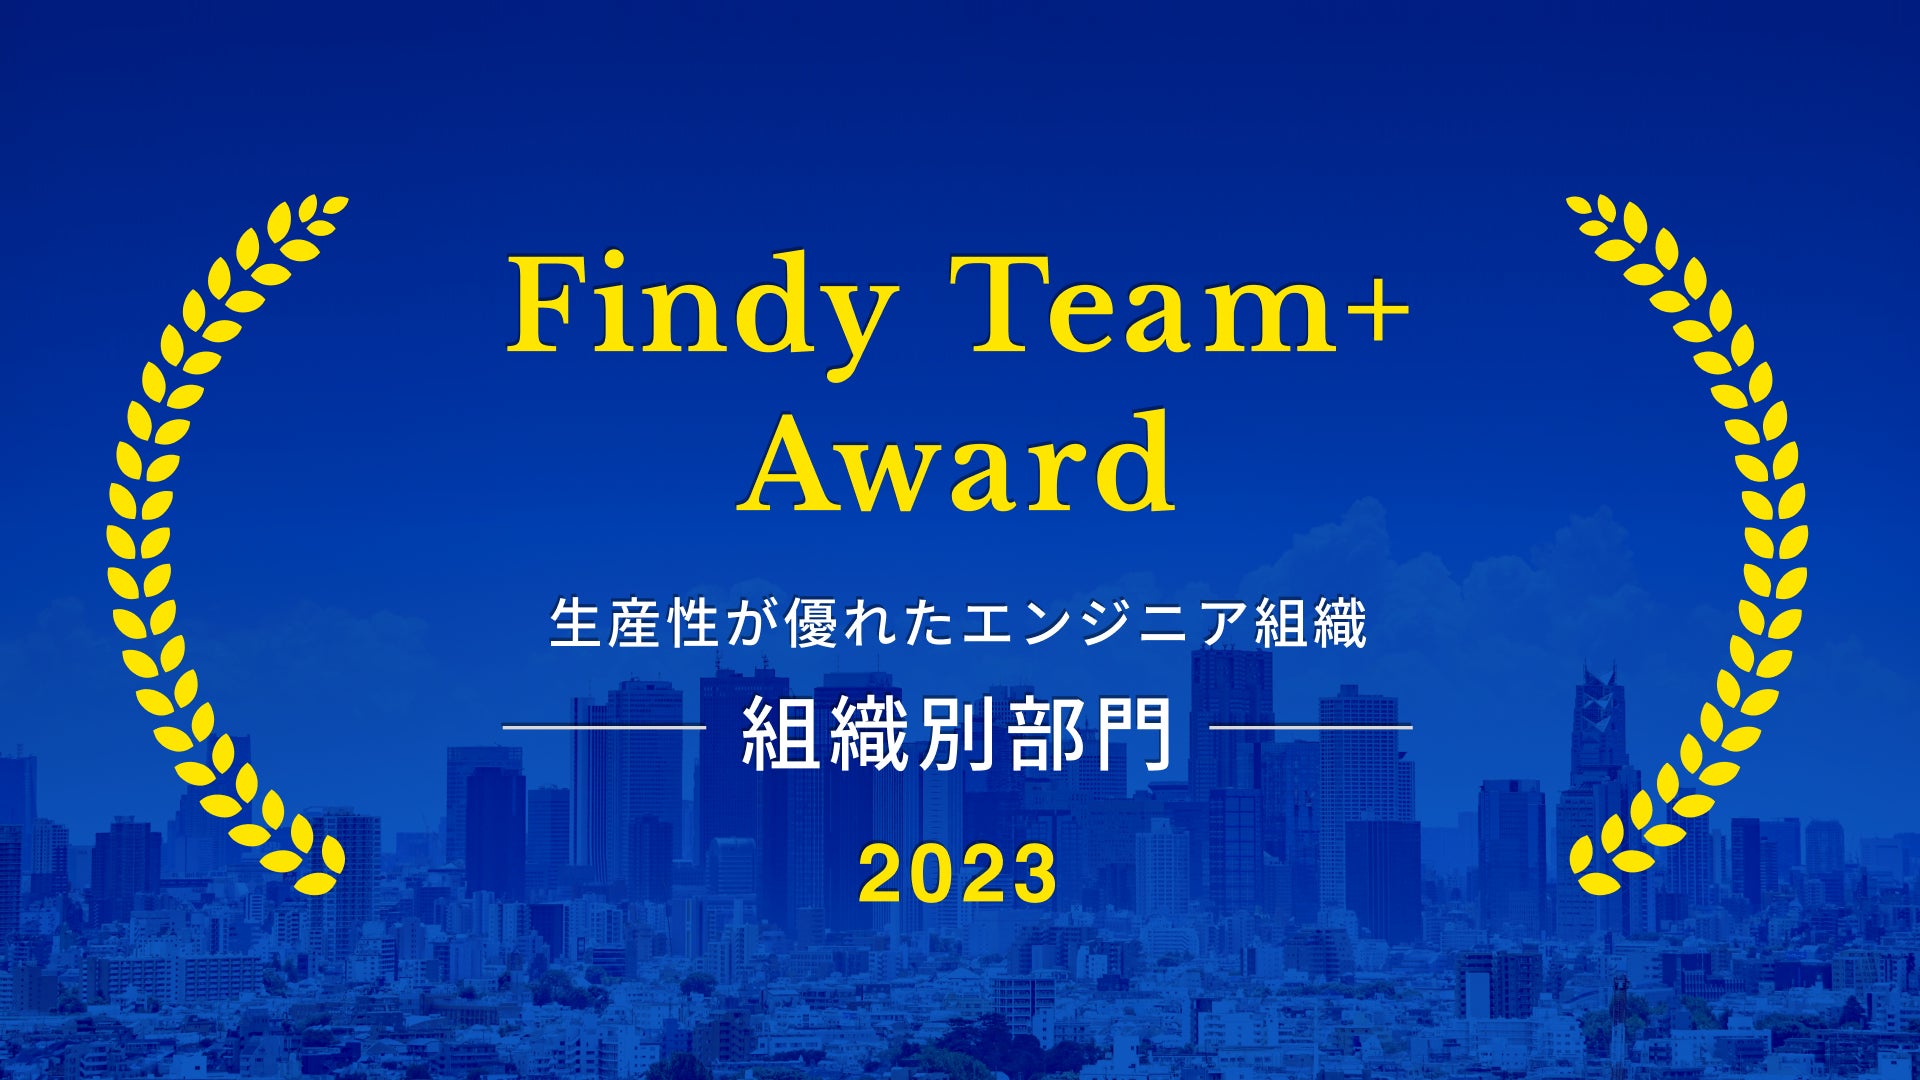 and factory、Findy Team+ Award 2023 を受賞 エンジニア組織の開発生産性が優れた企業として選出されました